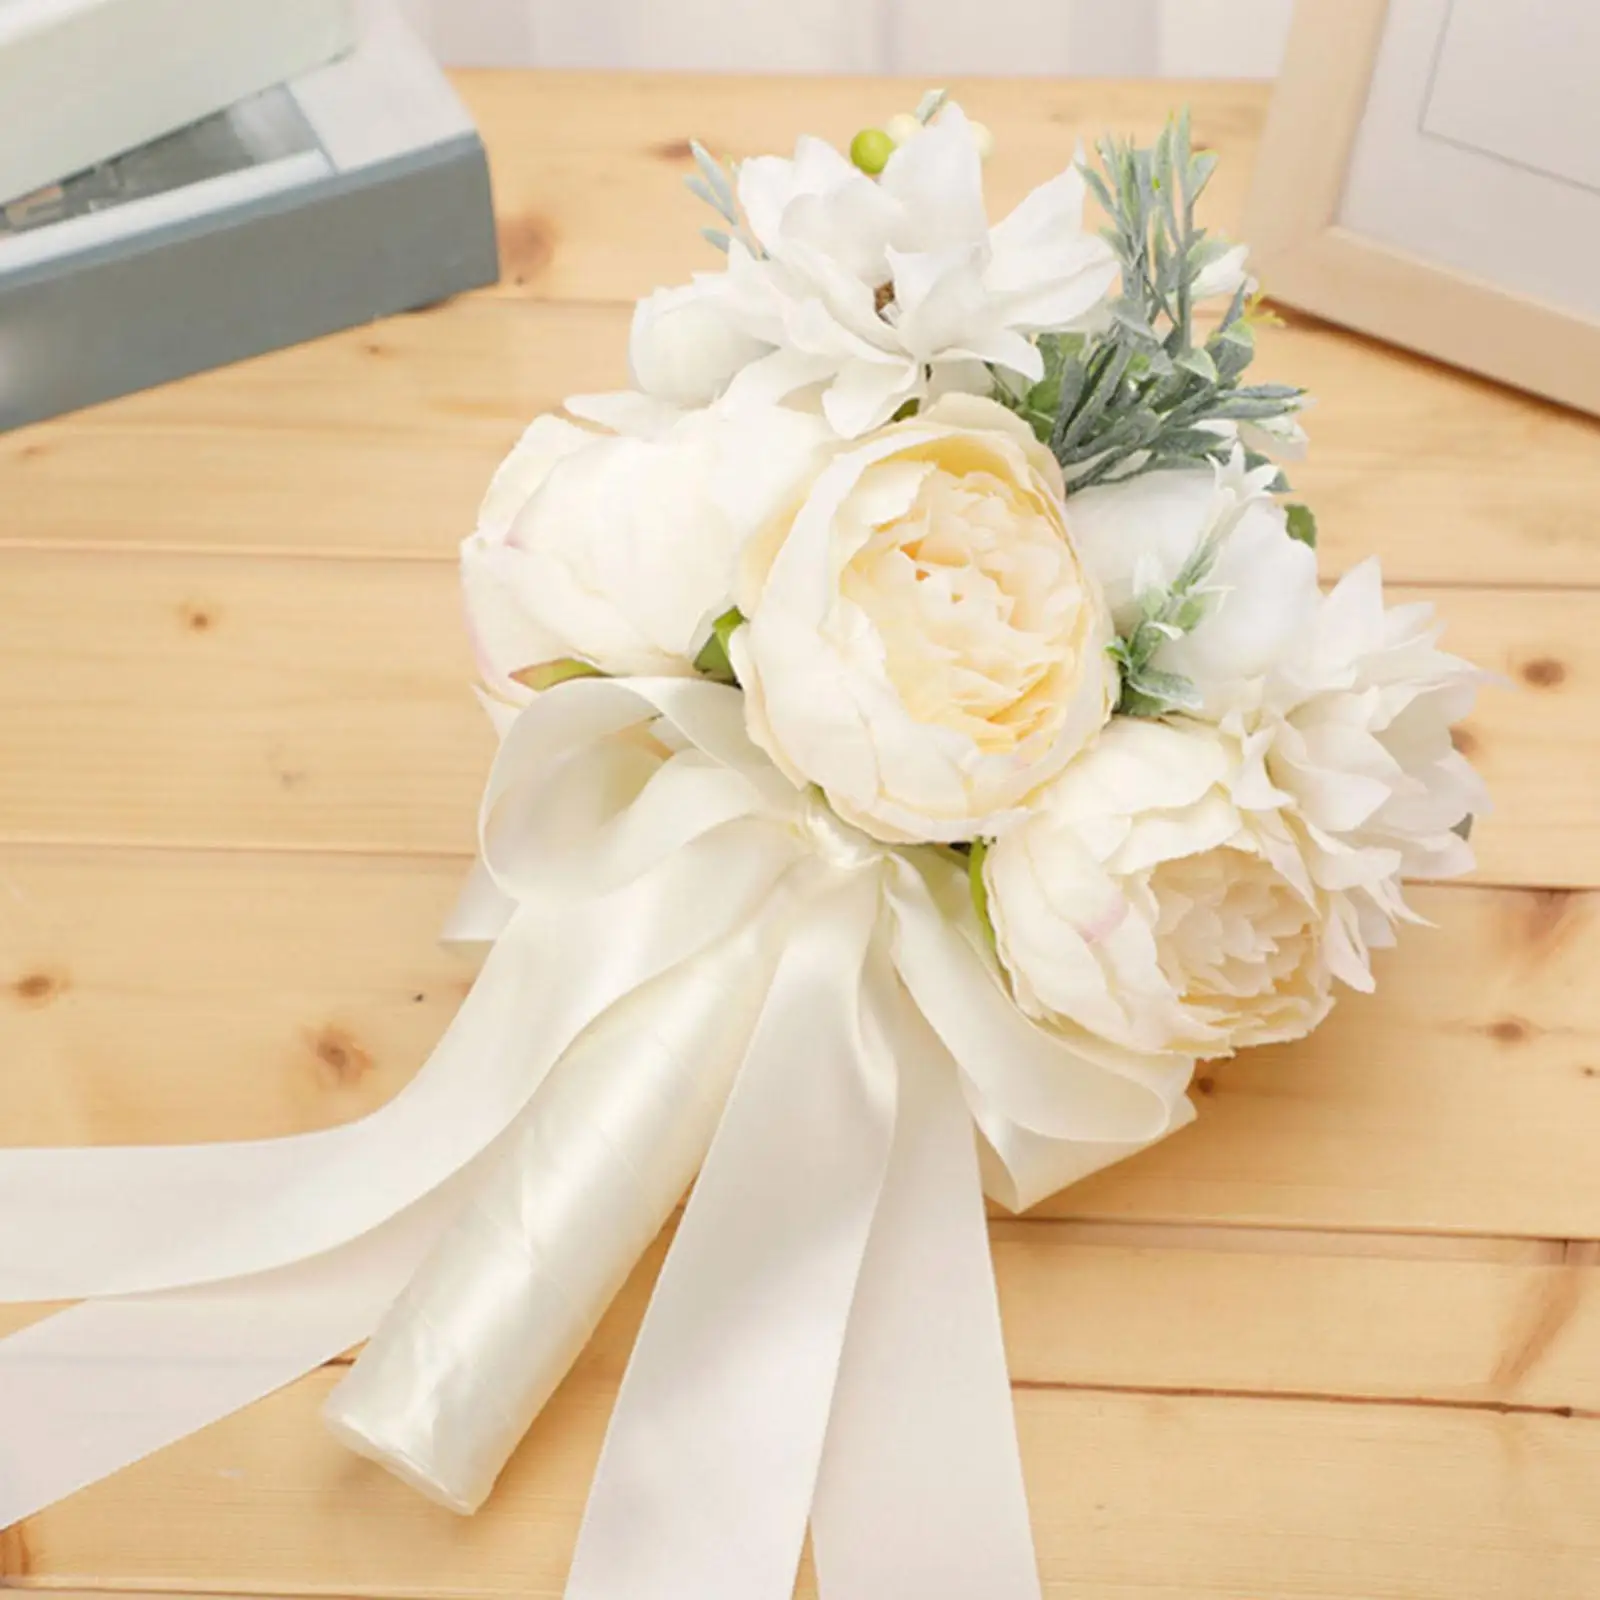 White Artificial Peony Flowers Bridal Wedding Bouquets Photo Props Exquisite Romantic Decorative Wedding Decoration Handmade